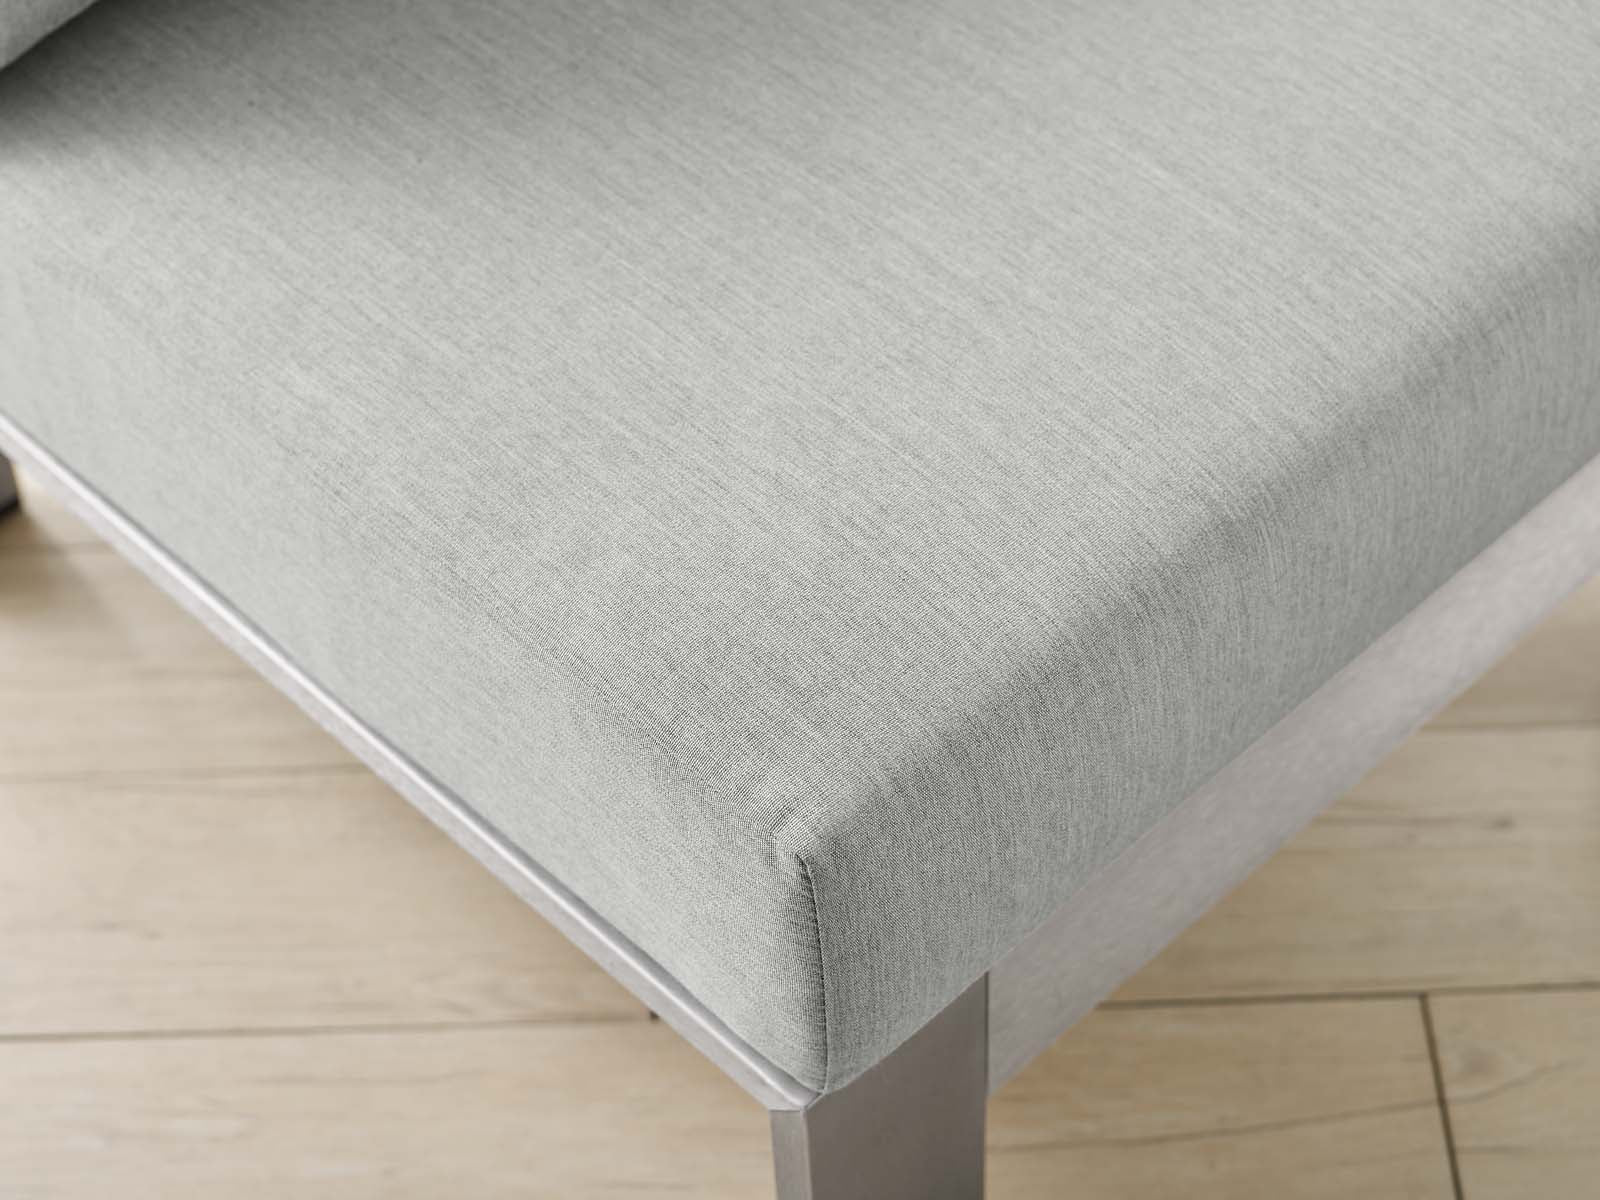 Modway Outdoor Chairs - Shore Sunbrella Fabric Aluminum Outdoor Patio Armless Chair Silver Gray